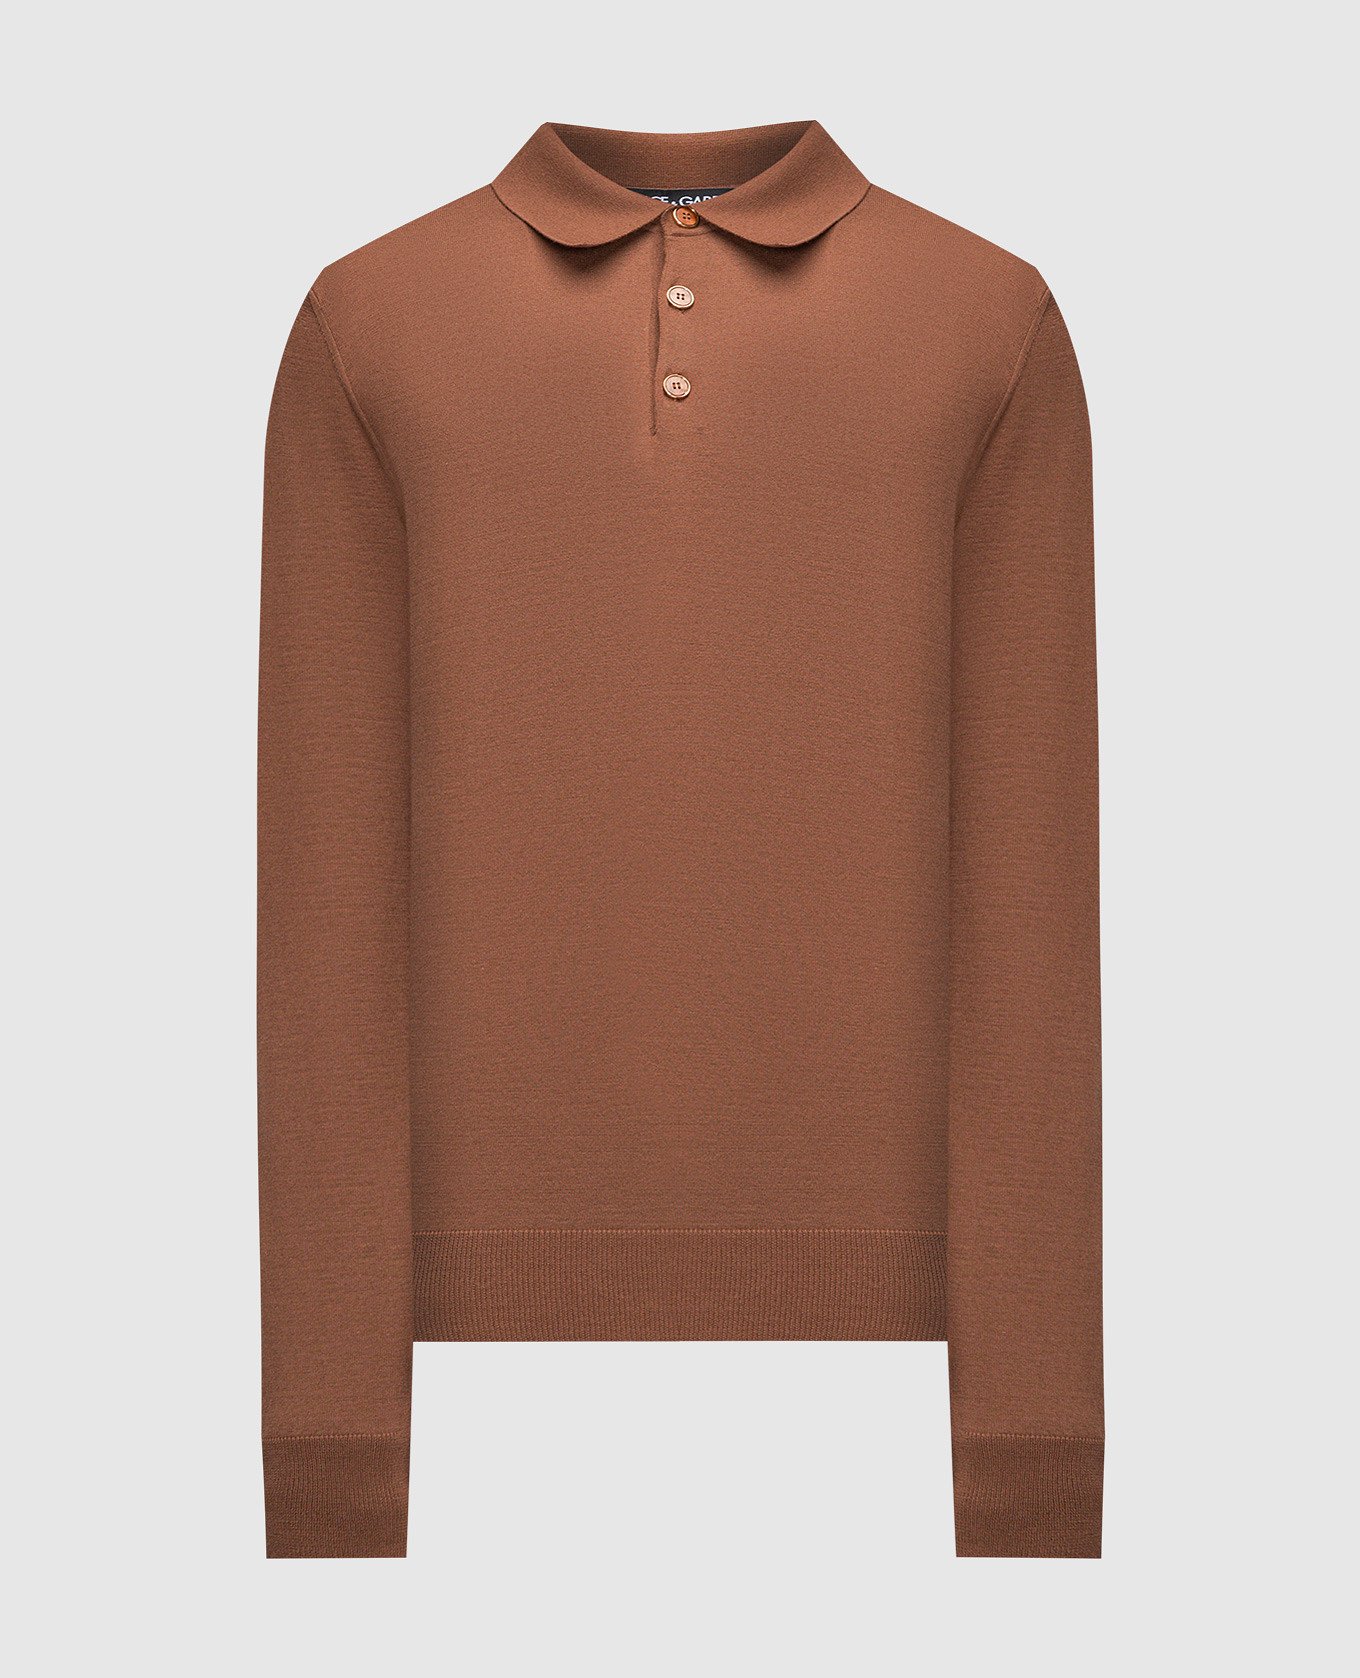 Brown cashmere polo shirt